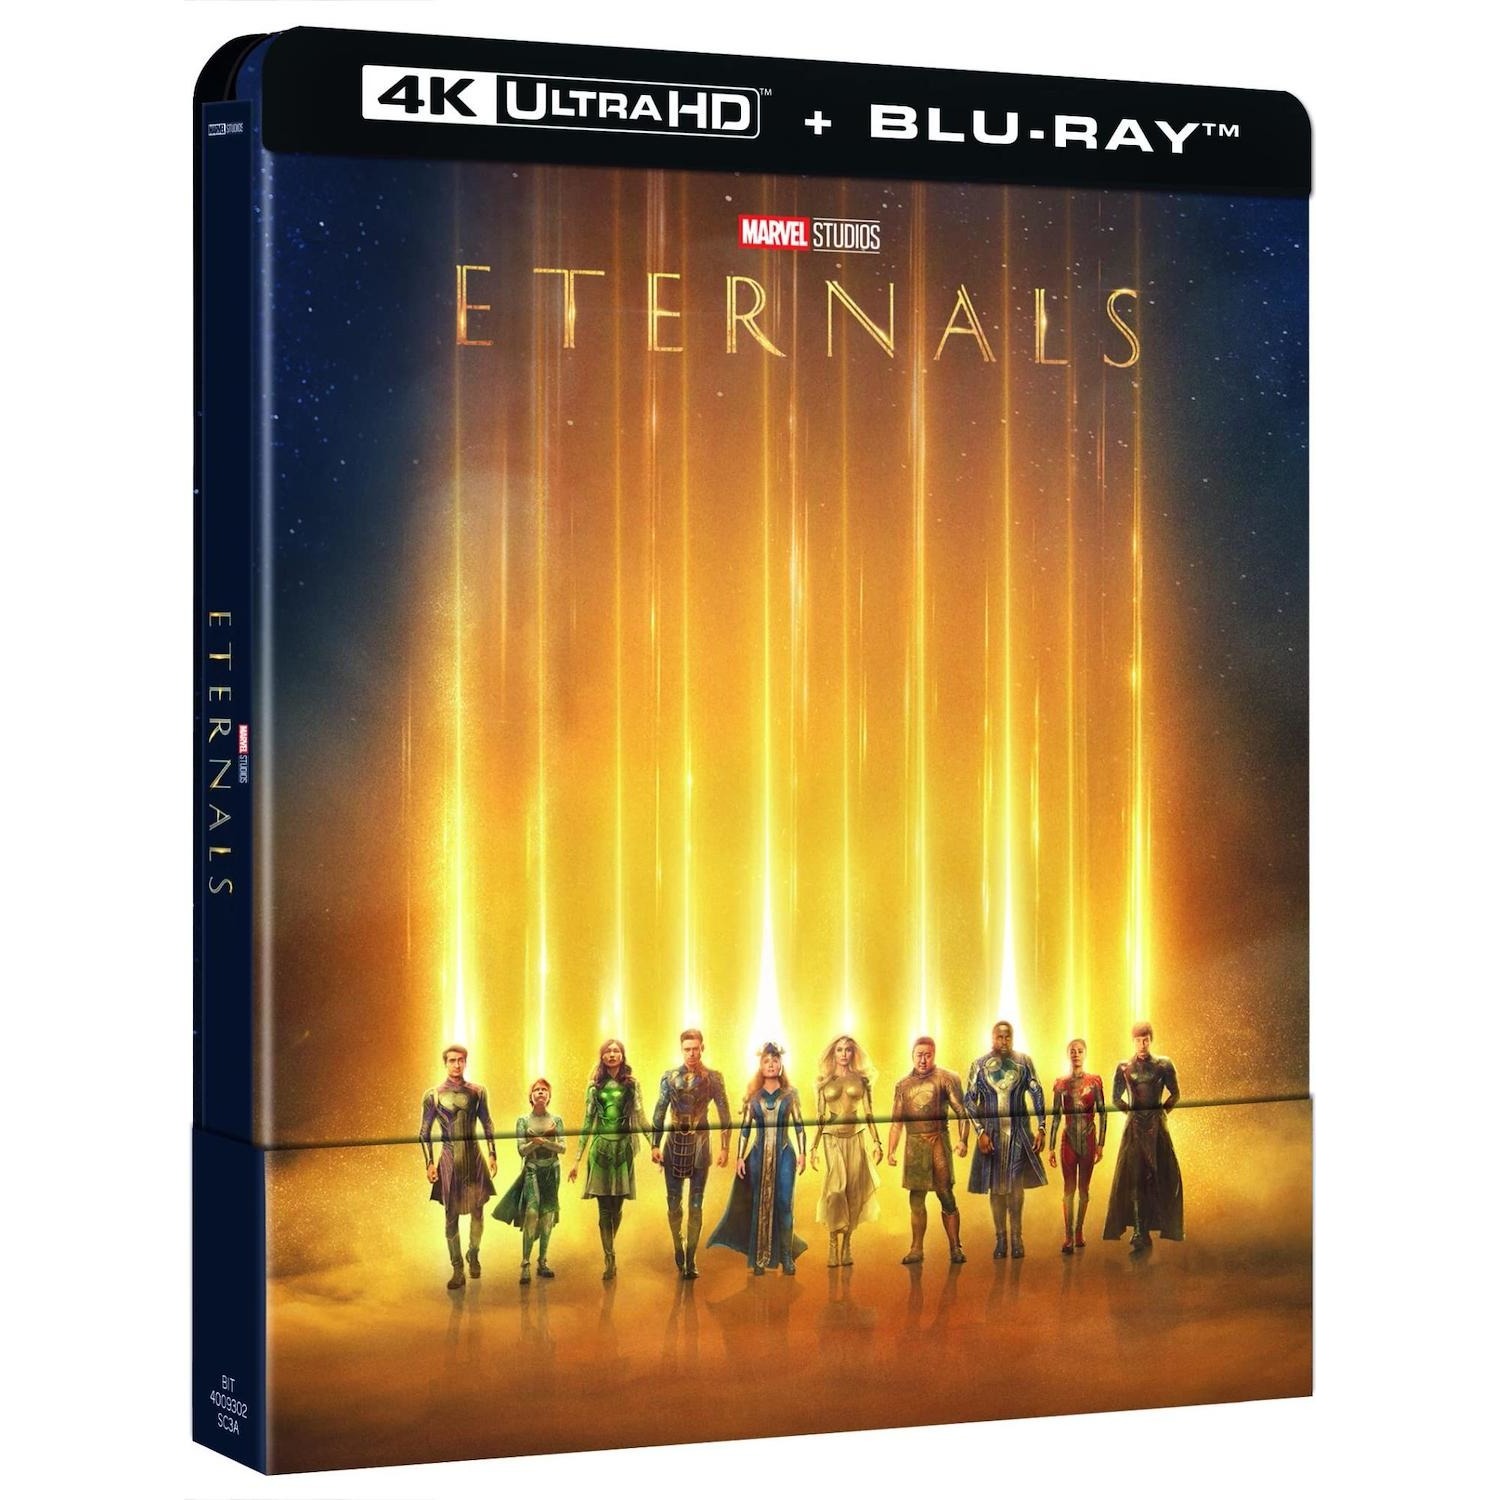 Immagine per Bluray 4K Eternals  Steelbook da DIMOStore